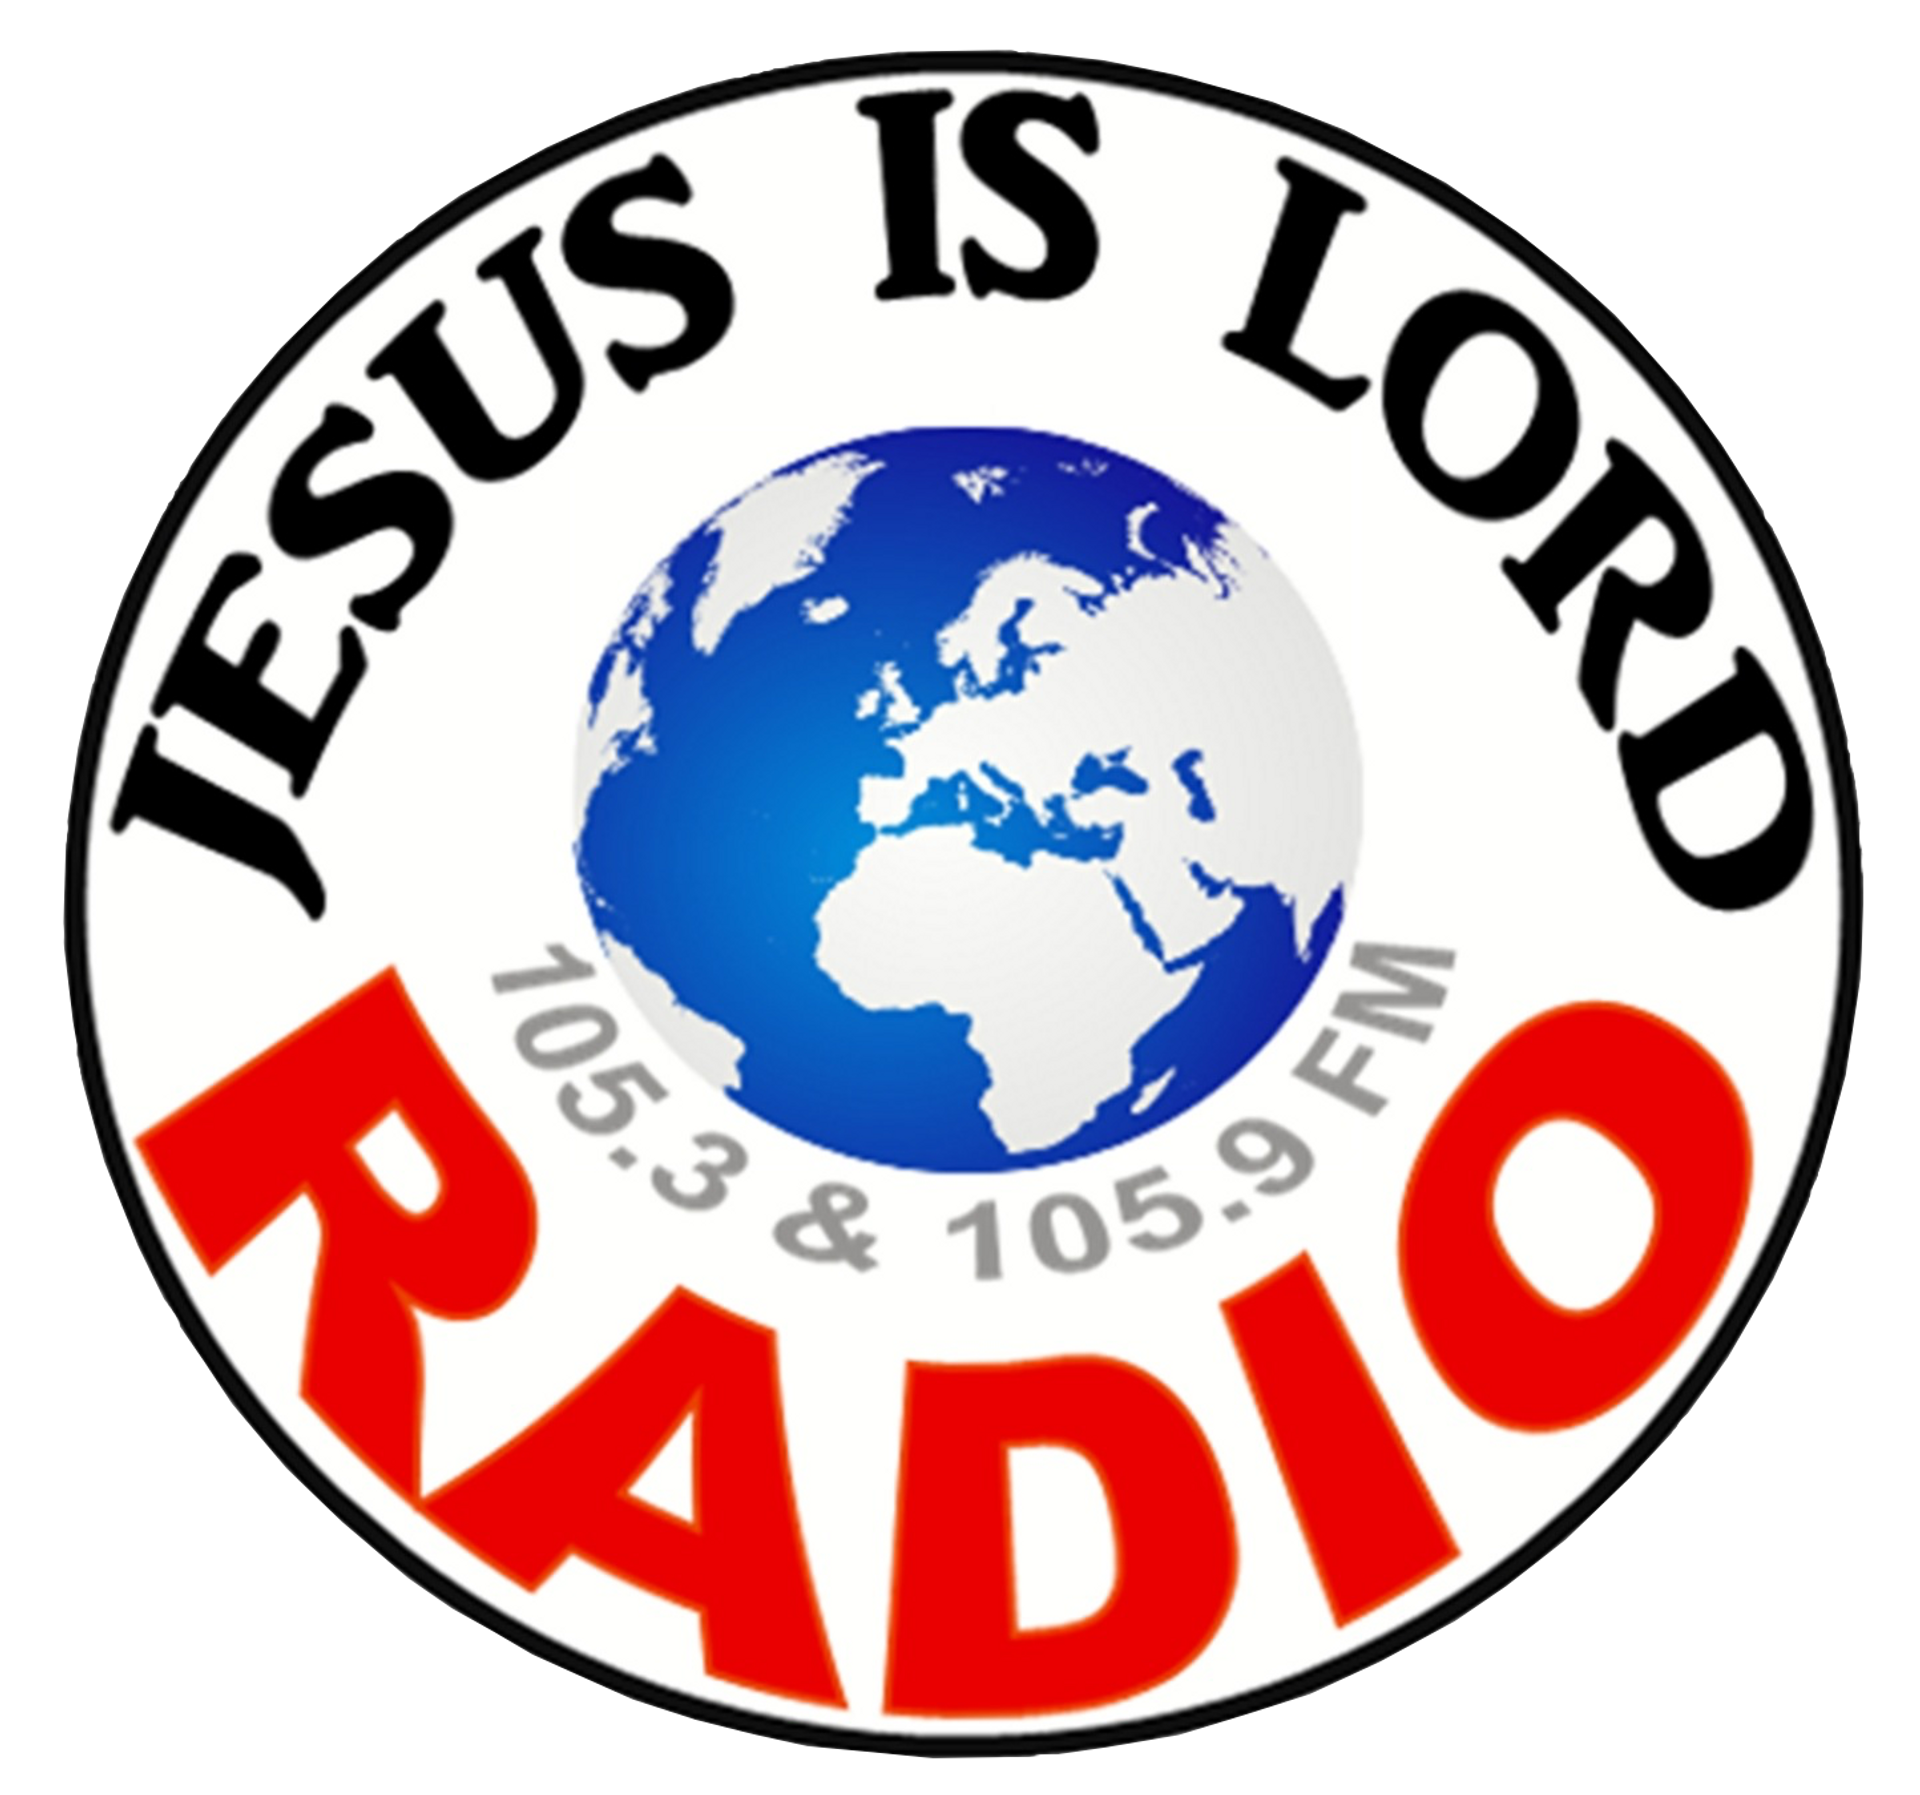 Jesus is Lord Radio Live